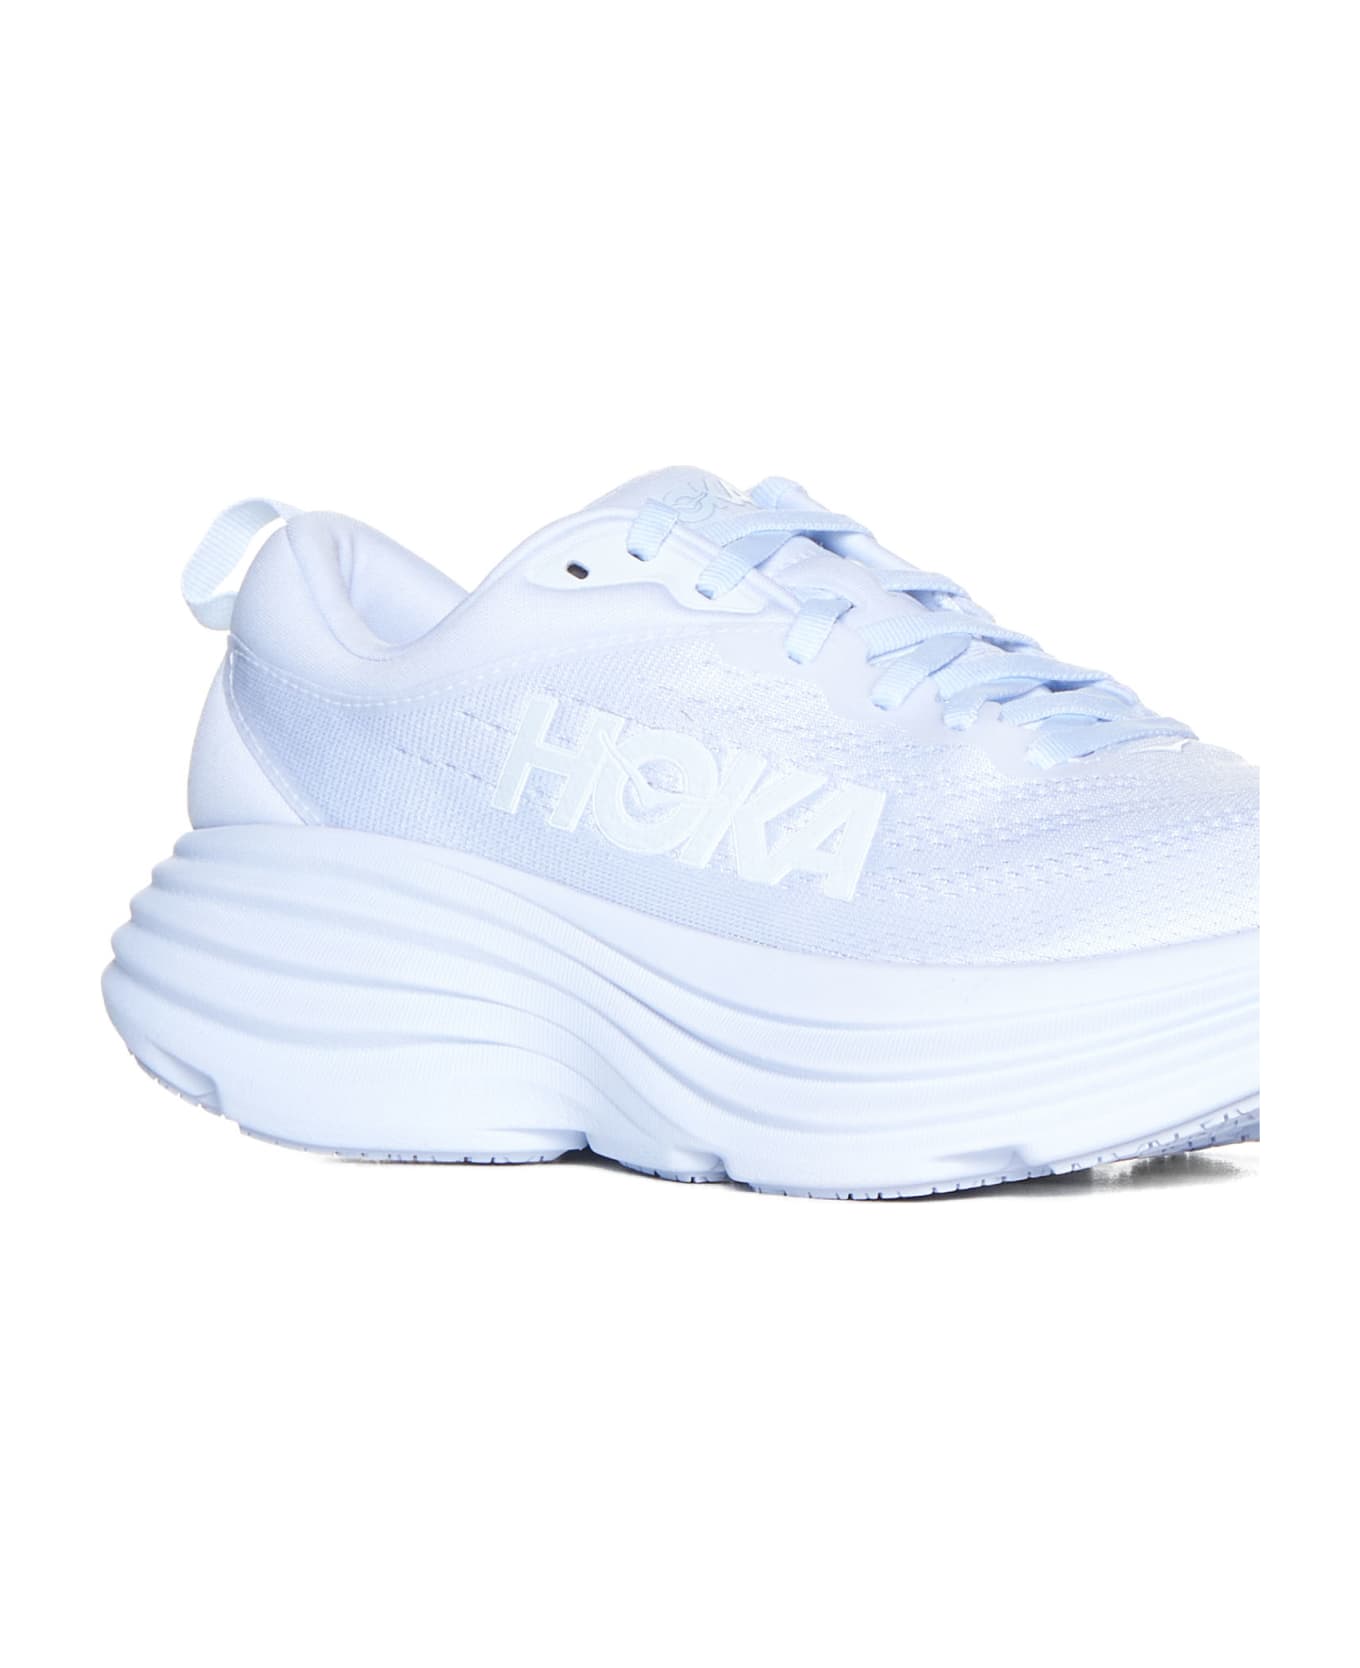 Hoka Sneakers - White ウェッジシューズ